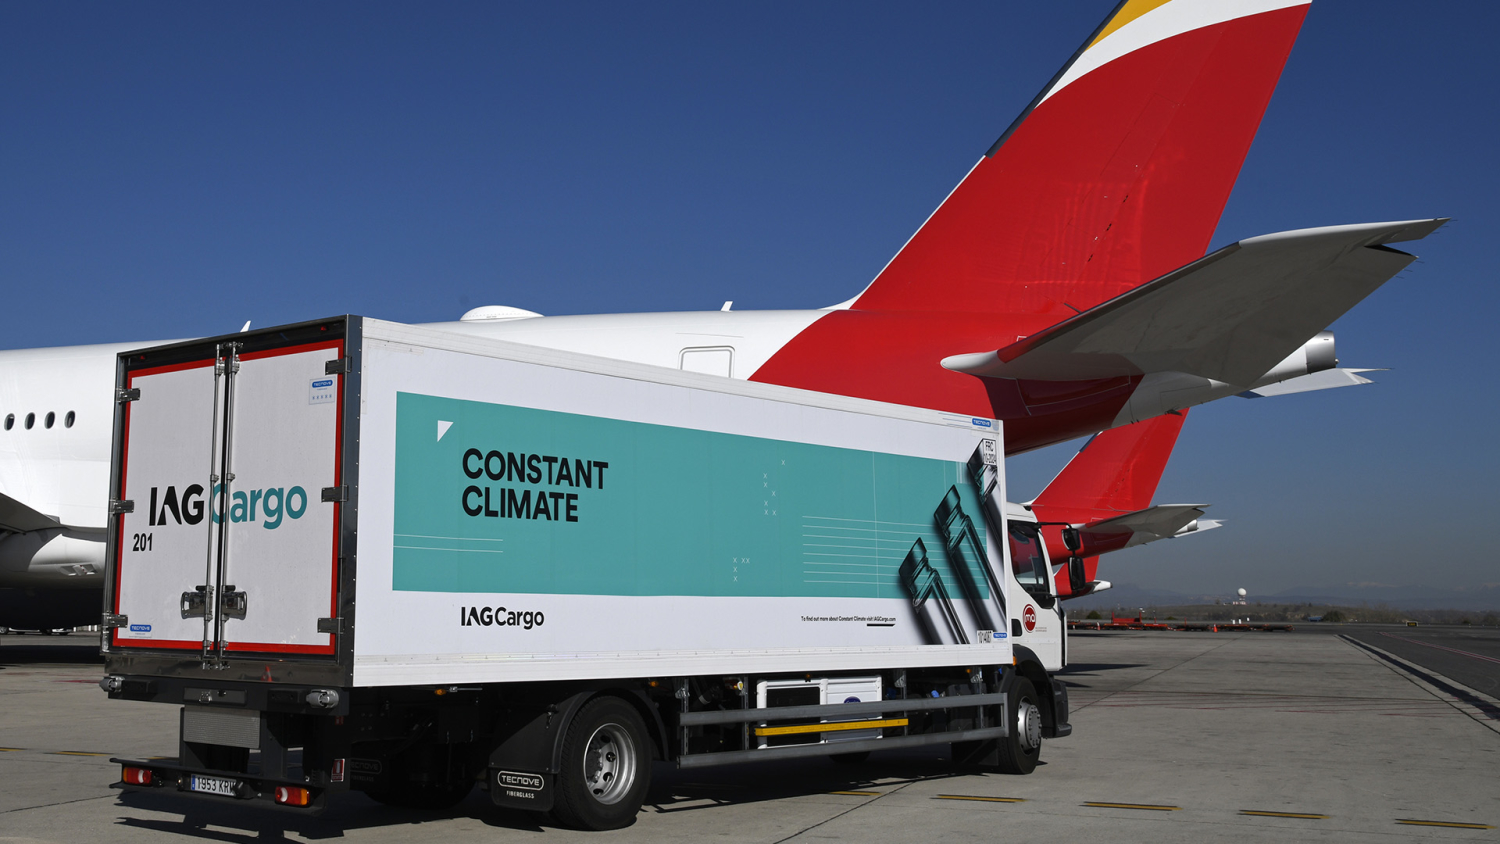 An IAG Cargo vehicle parked next to an Iberia passenger aircraft.